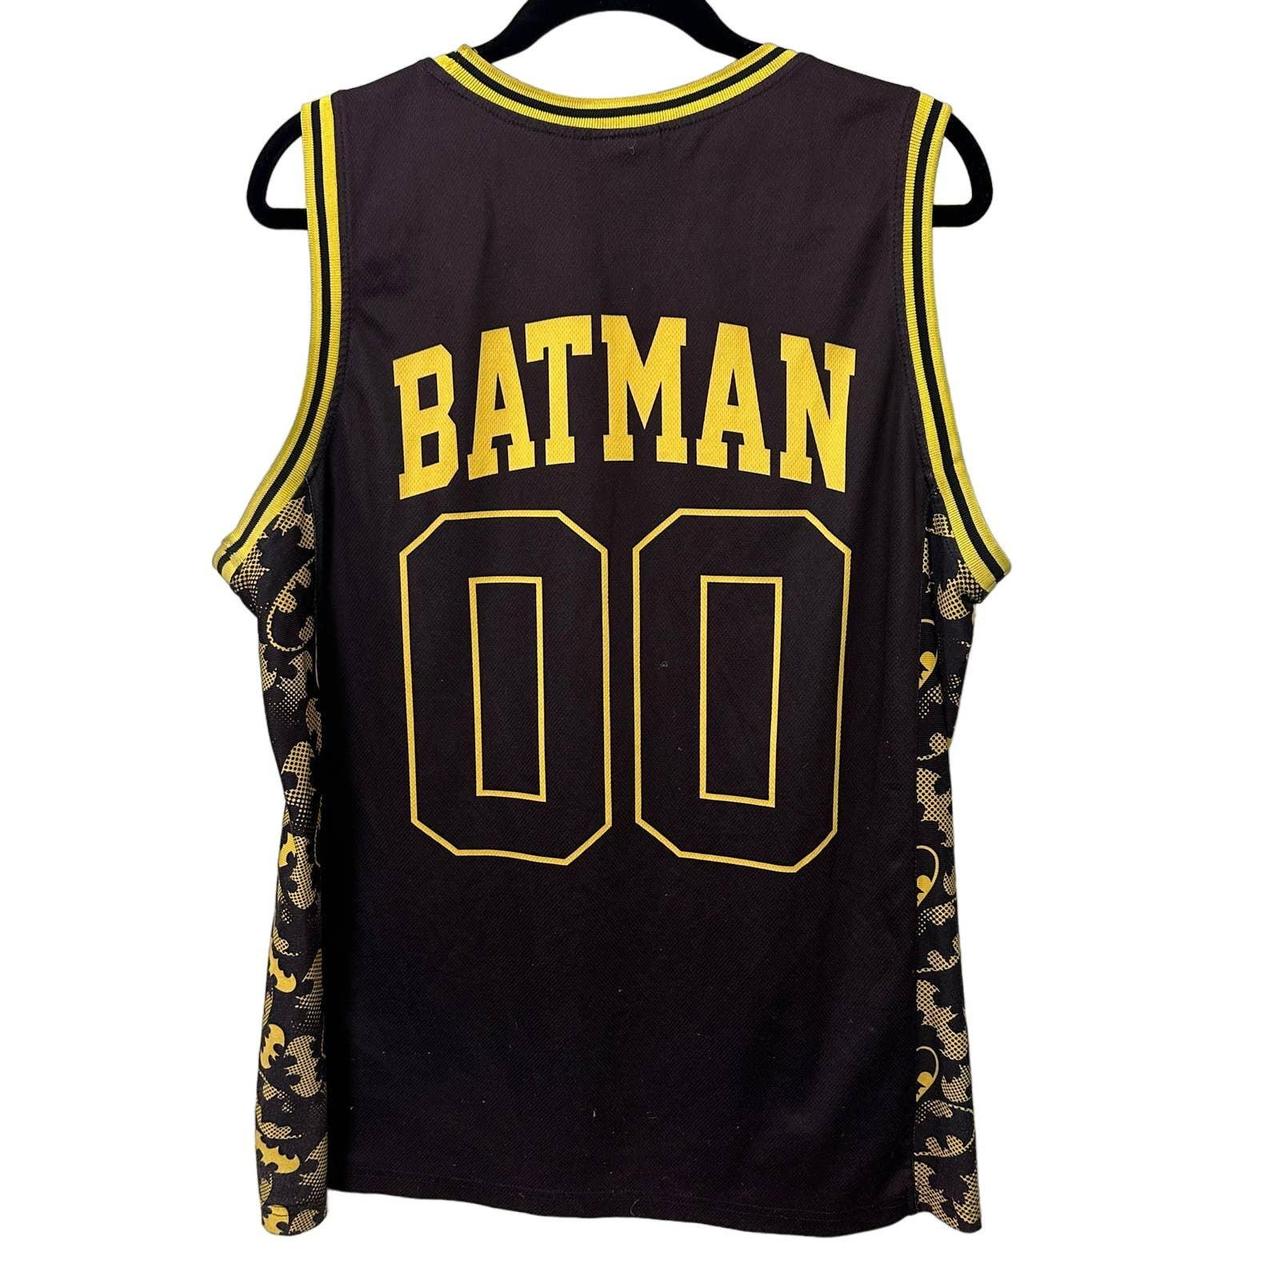 Batman Basketball Jersey Adult Size XL NWOT!!